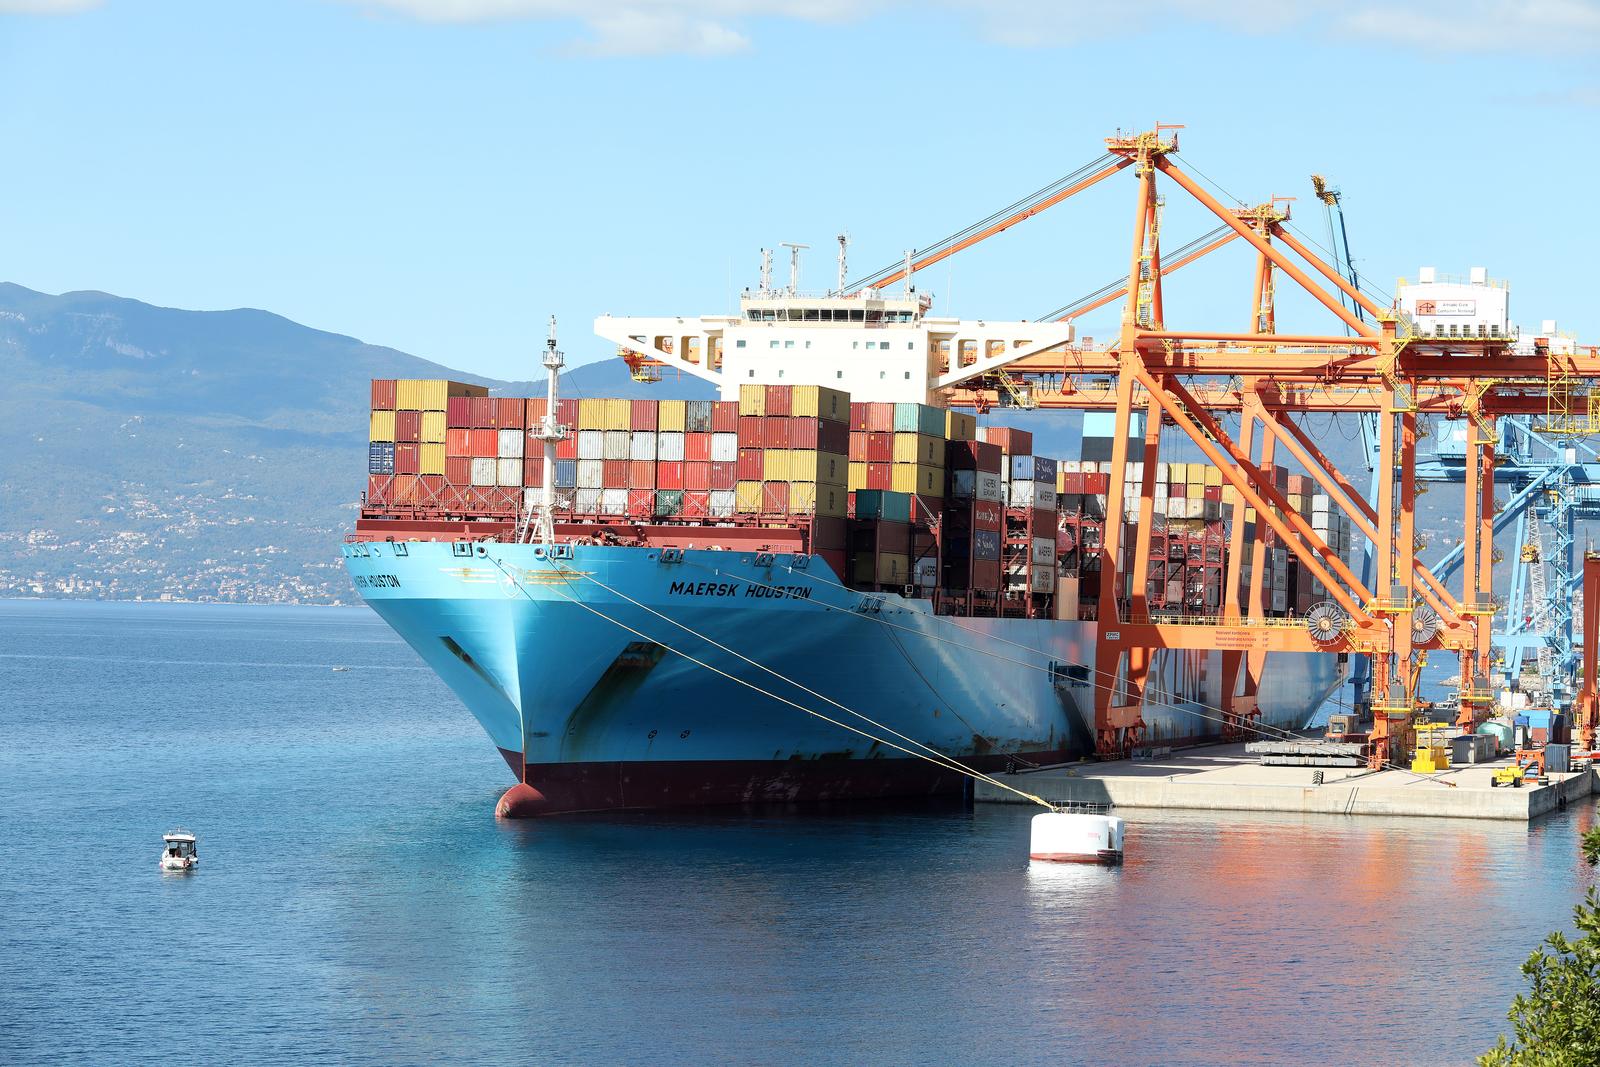 01.09.2021., Rijeka - Brod Maersk Houston prekrcava kontejnere na kontejnerskom terminalu rijecke luke na Brajdici. rPhoto: Goran Kovacic/PIXSELL